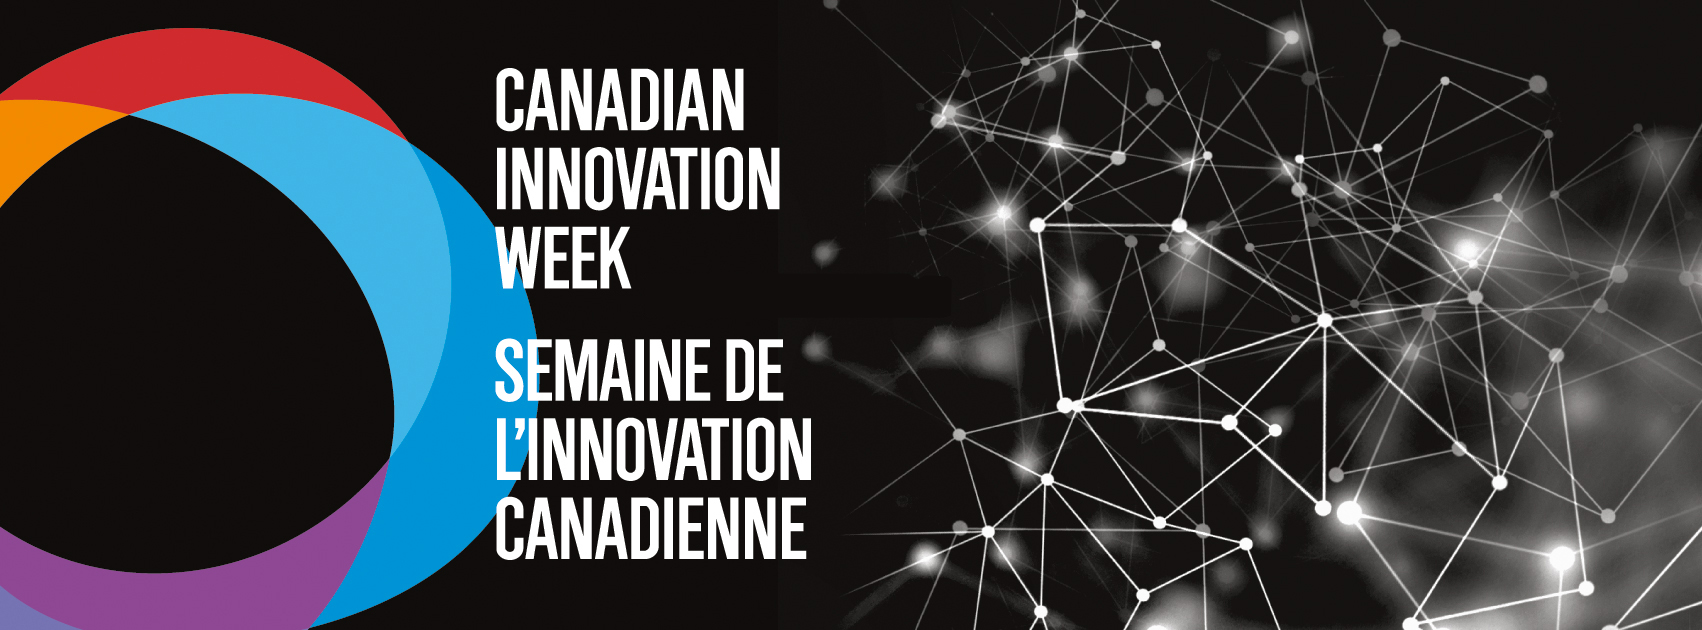 canadian innovation week banner